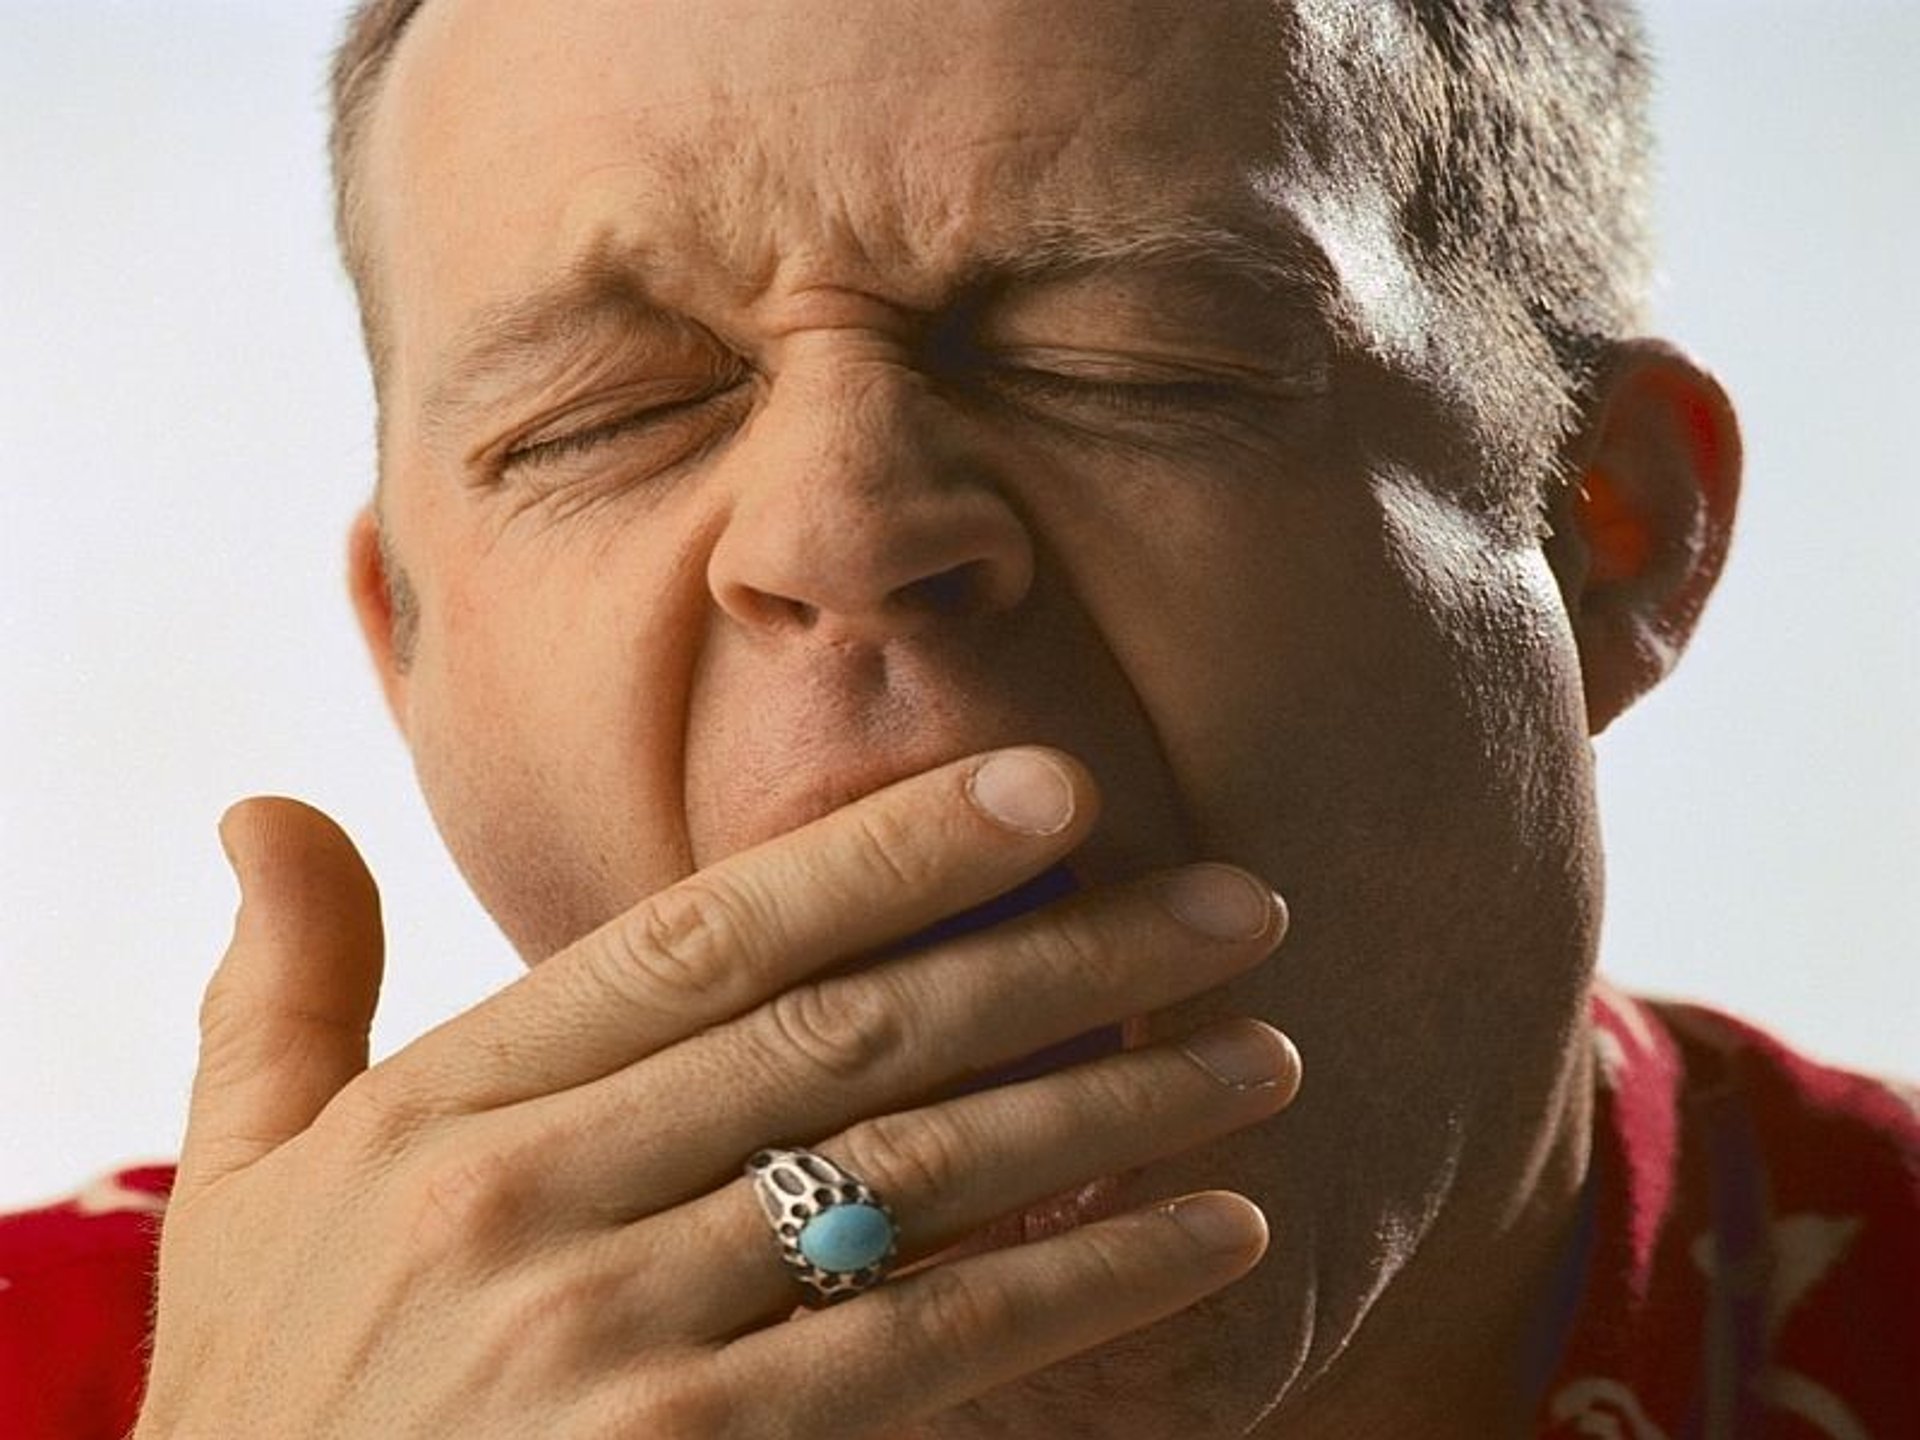 FDA Approves 'Tongue Strengthening' Device for Certain Sleep Apnea Patients thumbnail